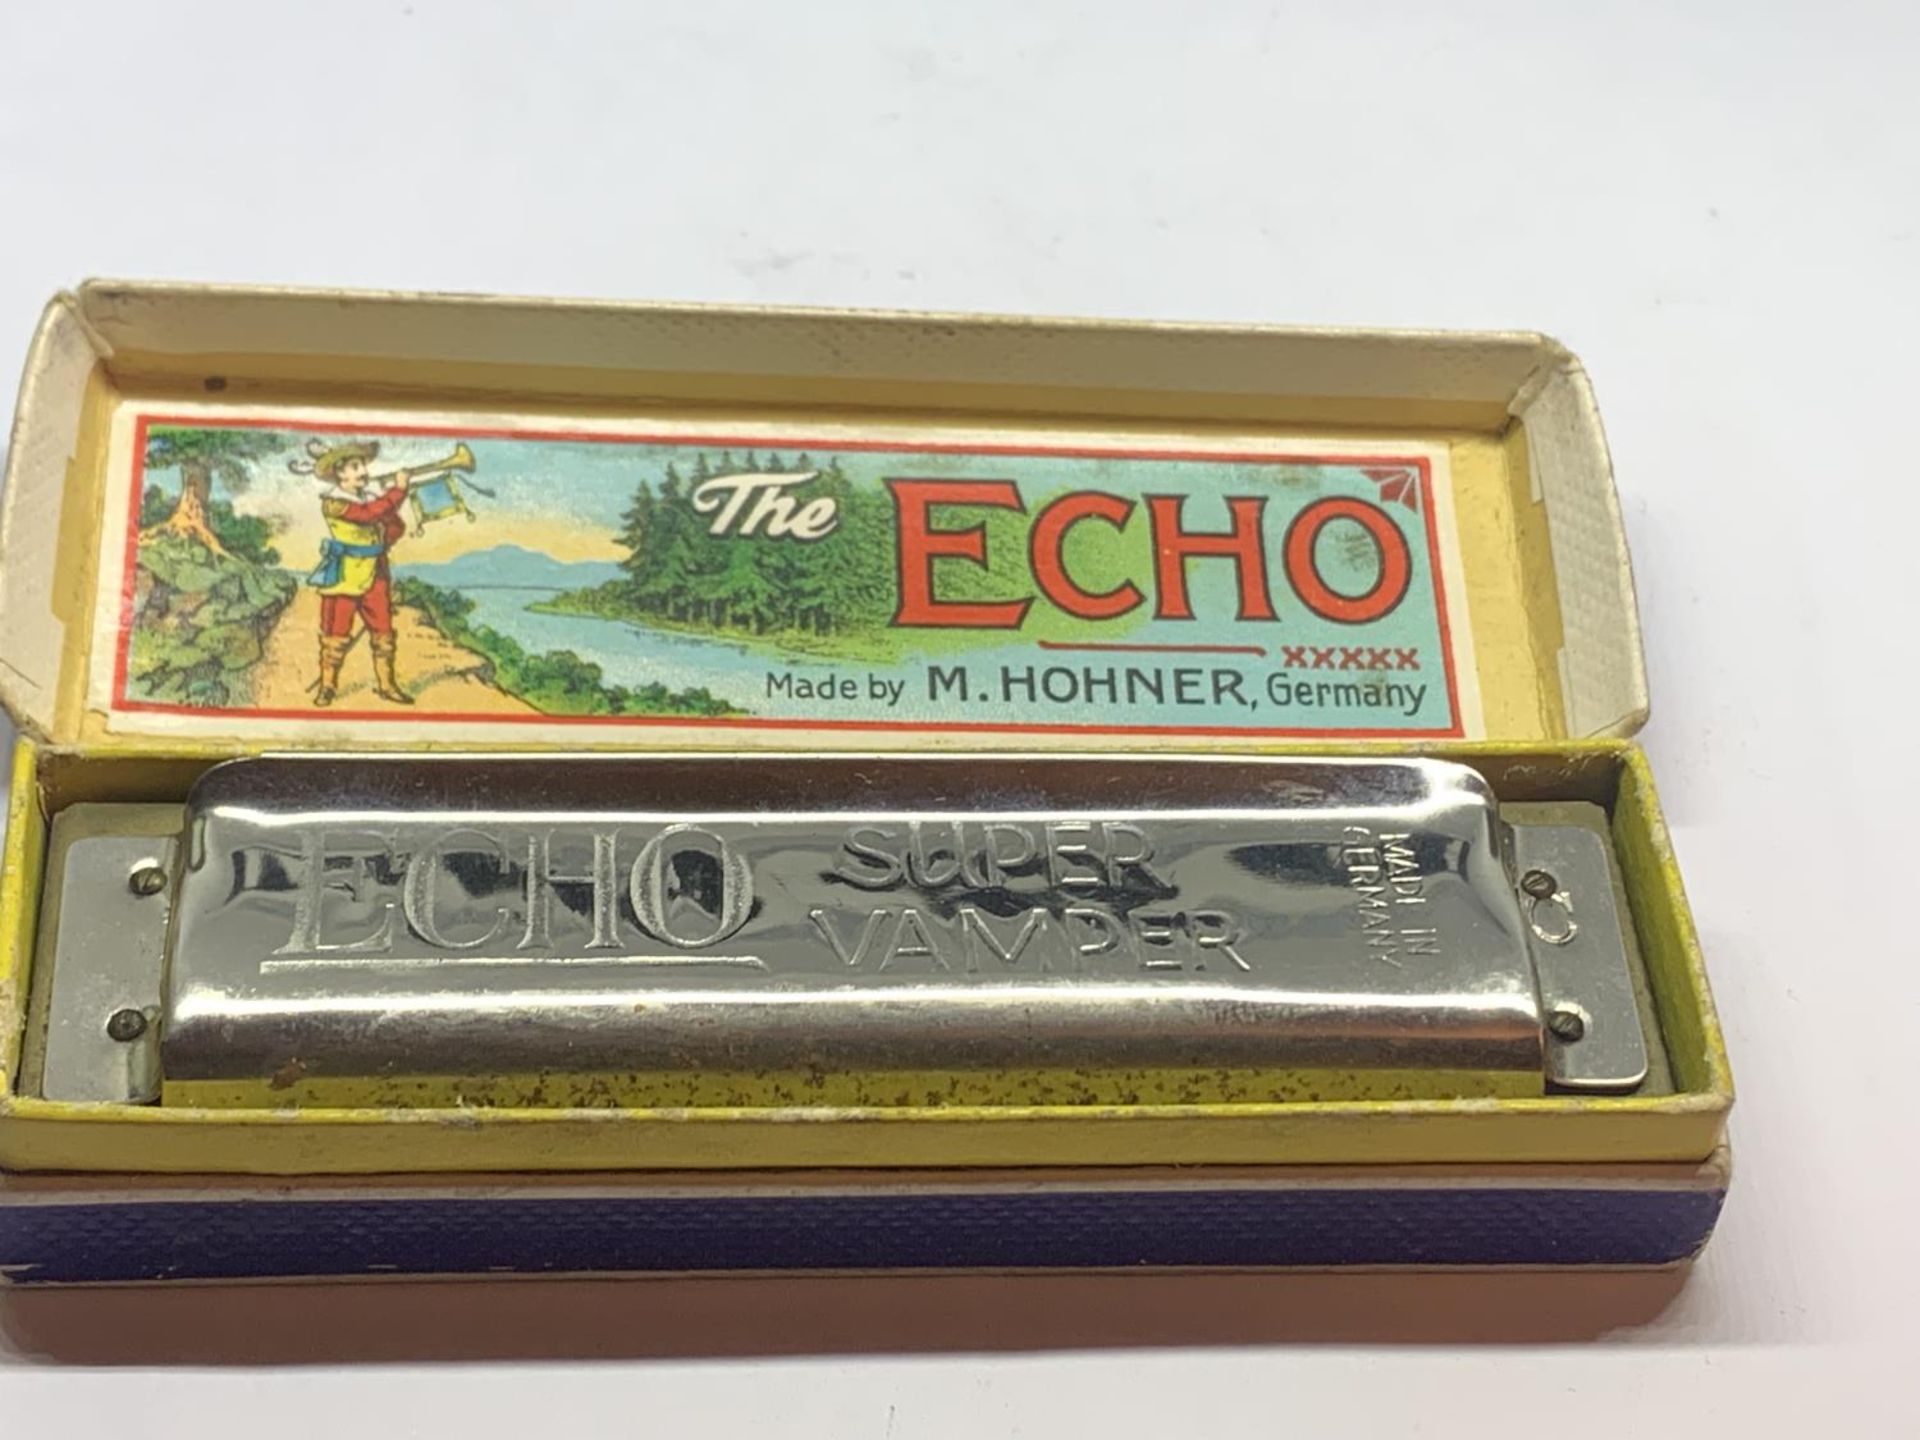 A VINTAGE HOHNER ECHO SUPER VAMPER MOUTH ORGAN WITH ORIGINAL BOX